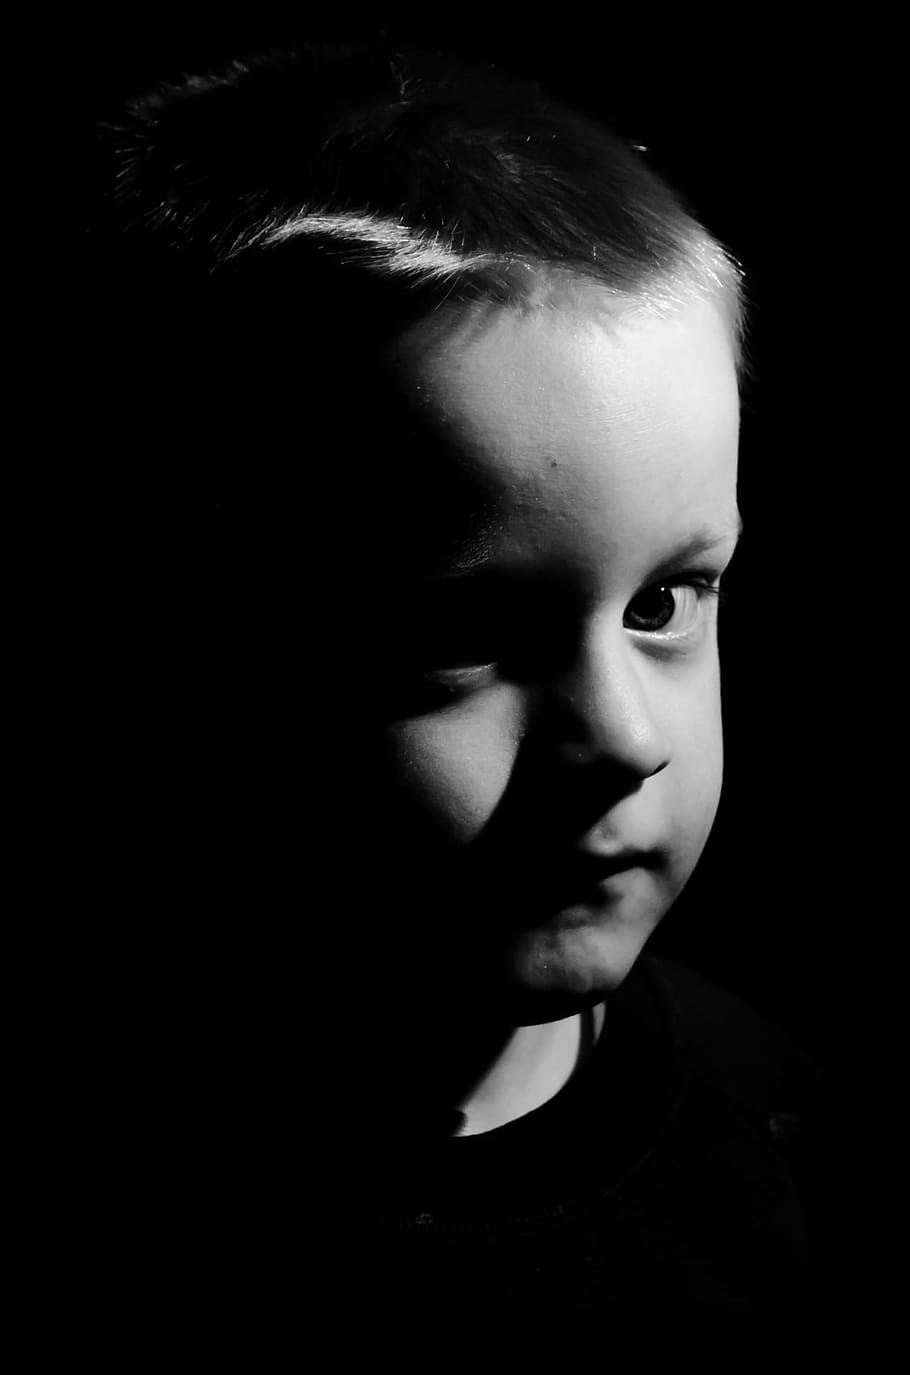 boy's face, shadow, light, darkness, portrait, side, background